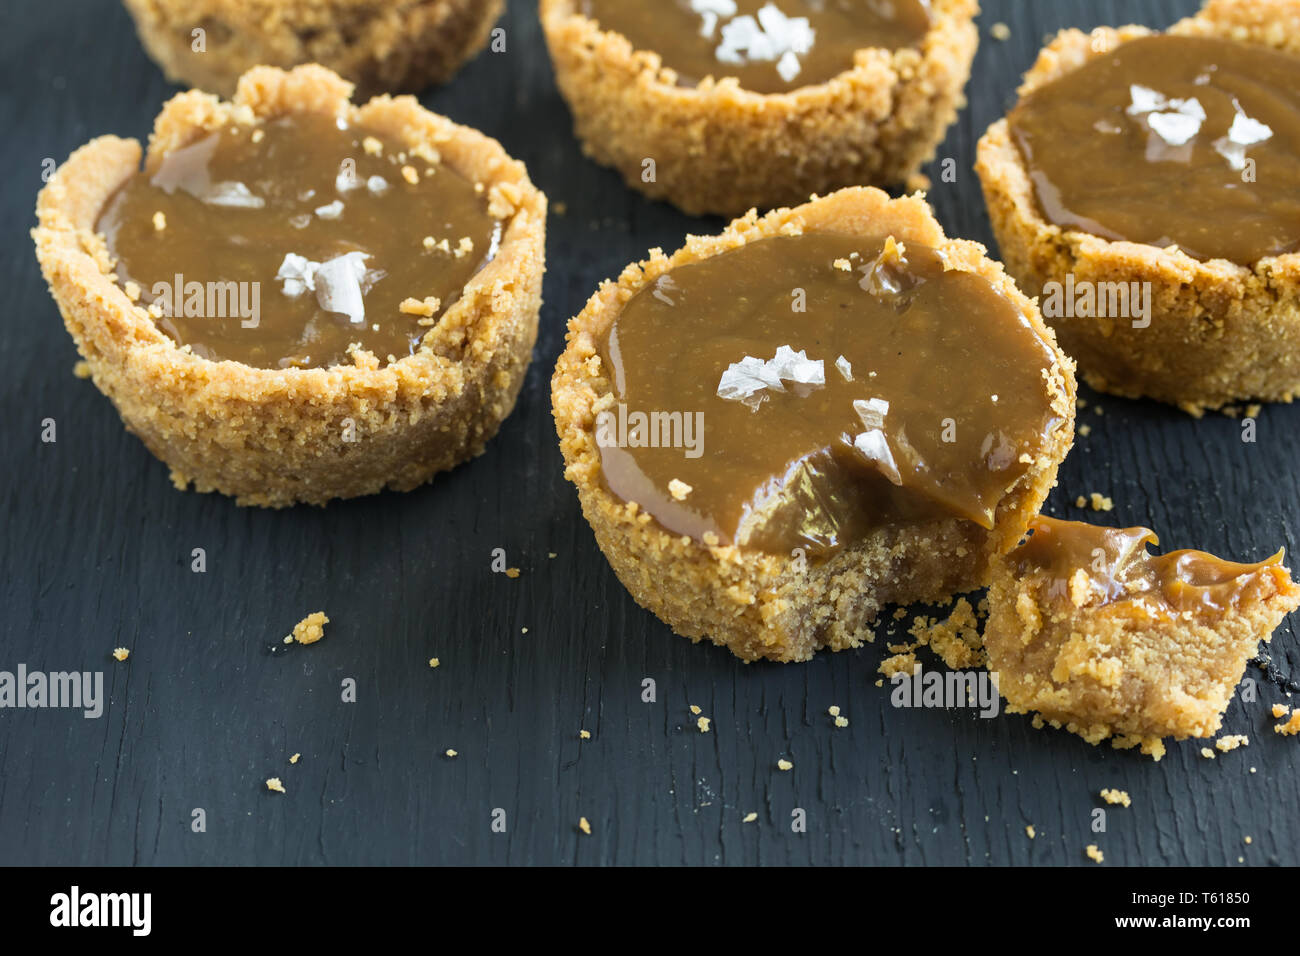 Gesalzen Karamell Torten auf schwarz Tabelle - Close up horizontale Foto Stockfoto